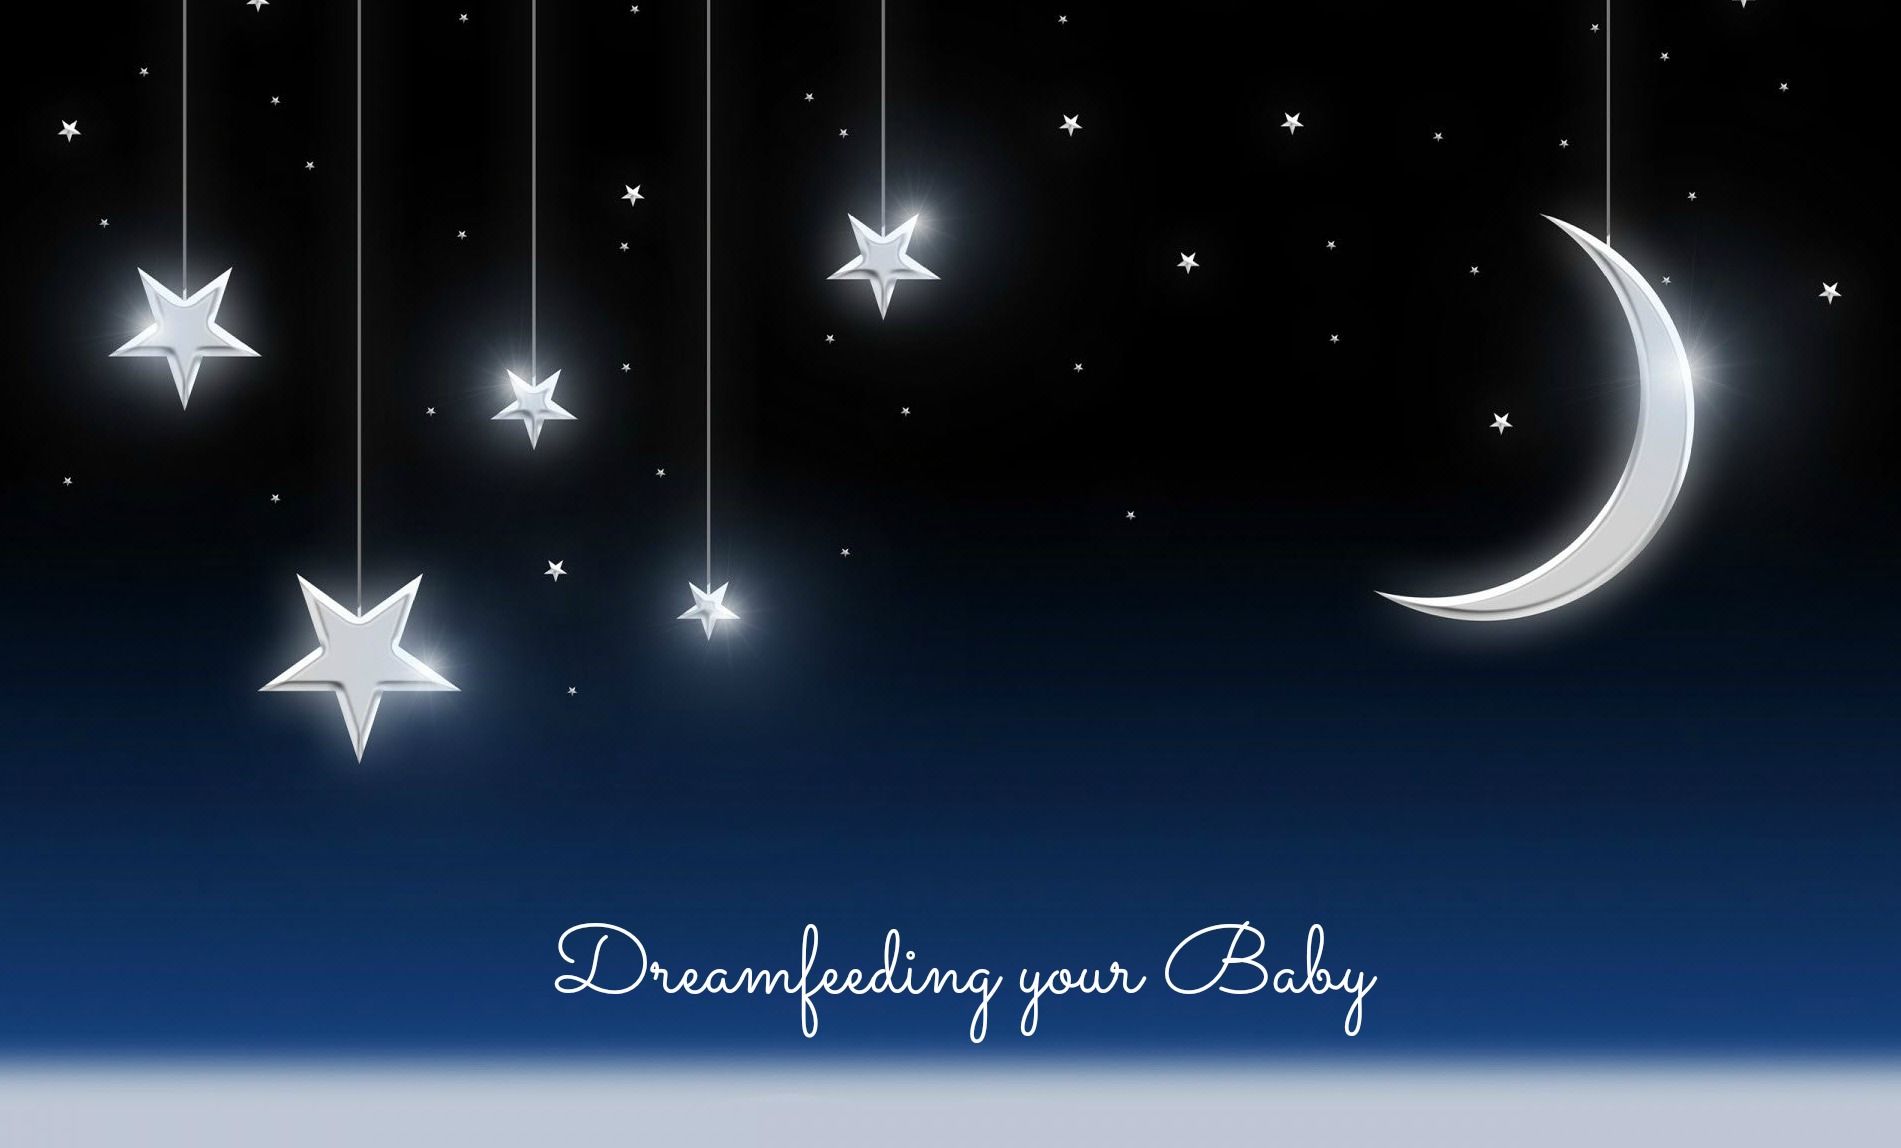 Dreamfeeding. Moon and stars wallpaper, Aesthetic desktop